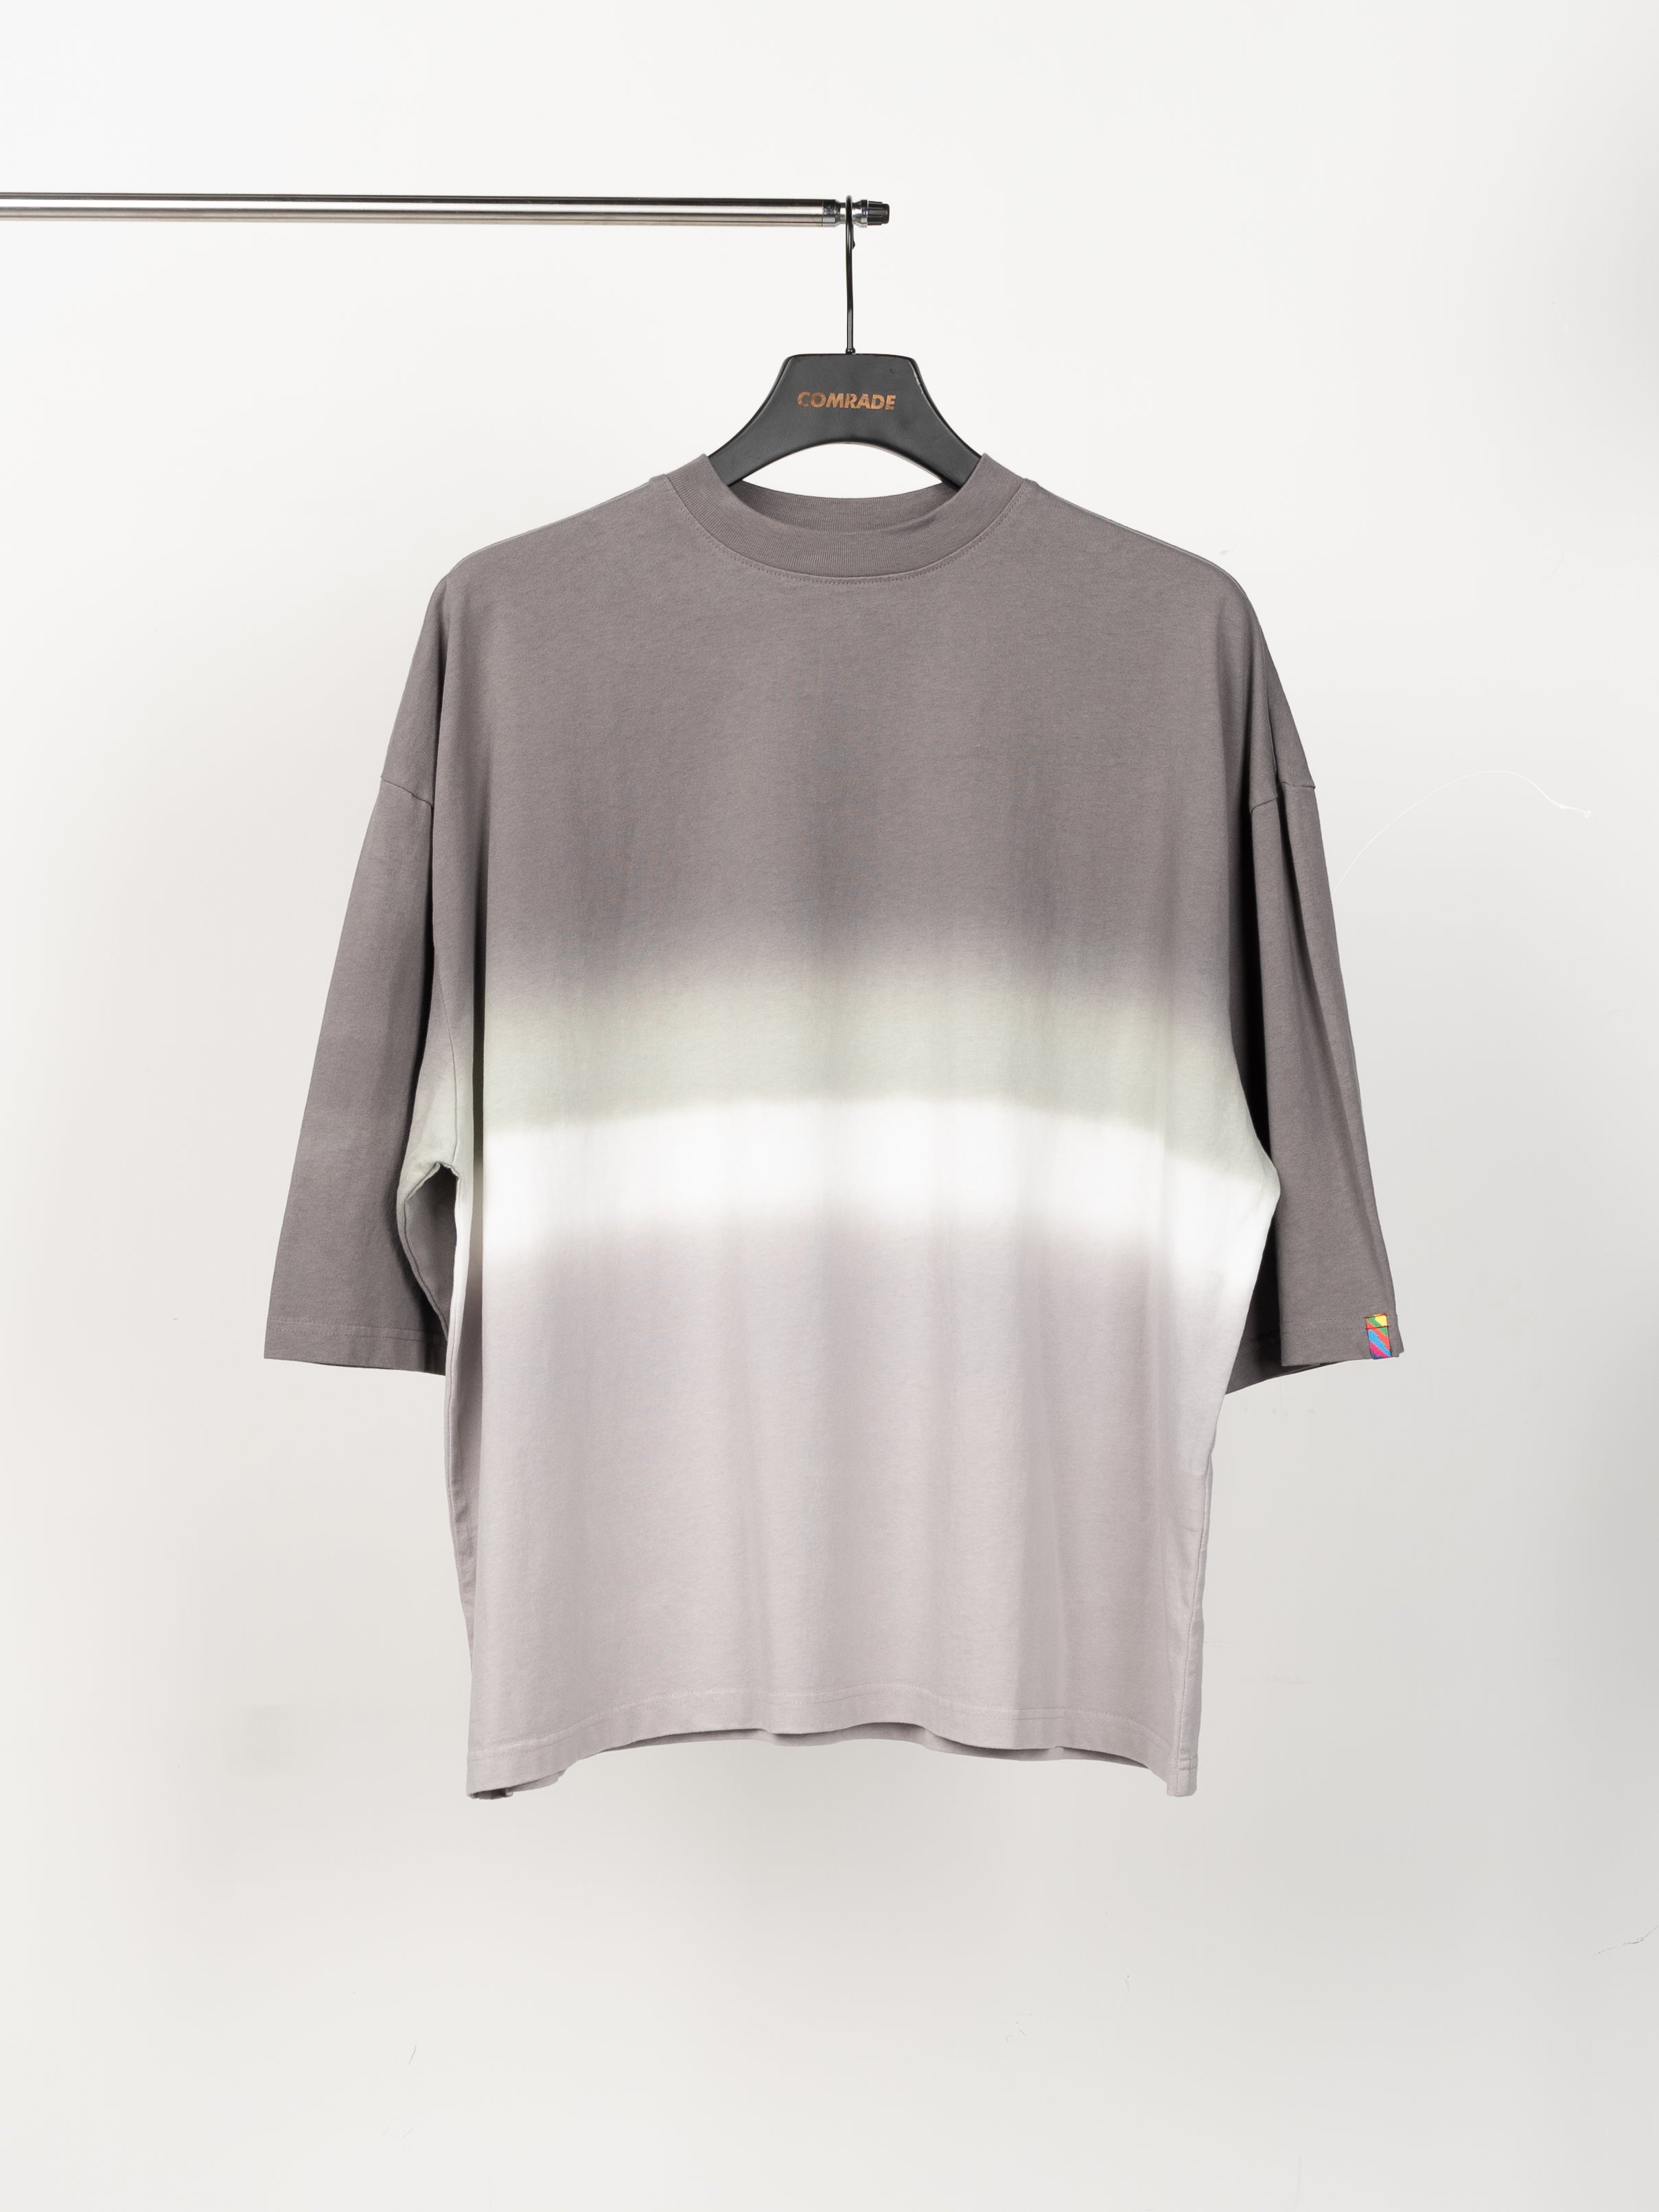 is-ness x GRAMICCI Horizon Overdye T-Shirt (Charcoal x Light Gray)